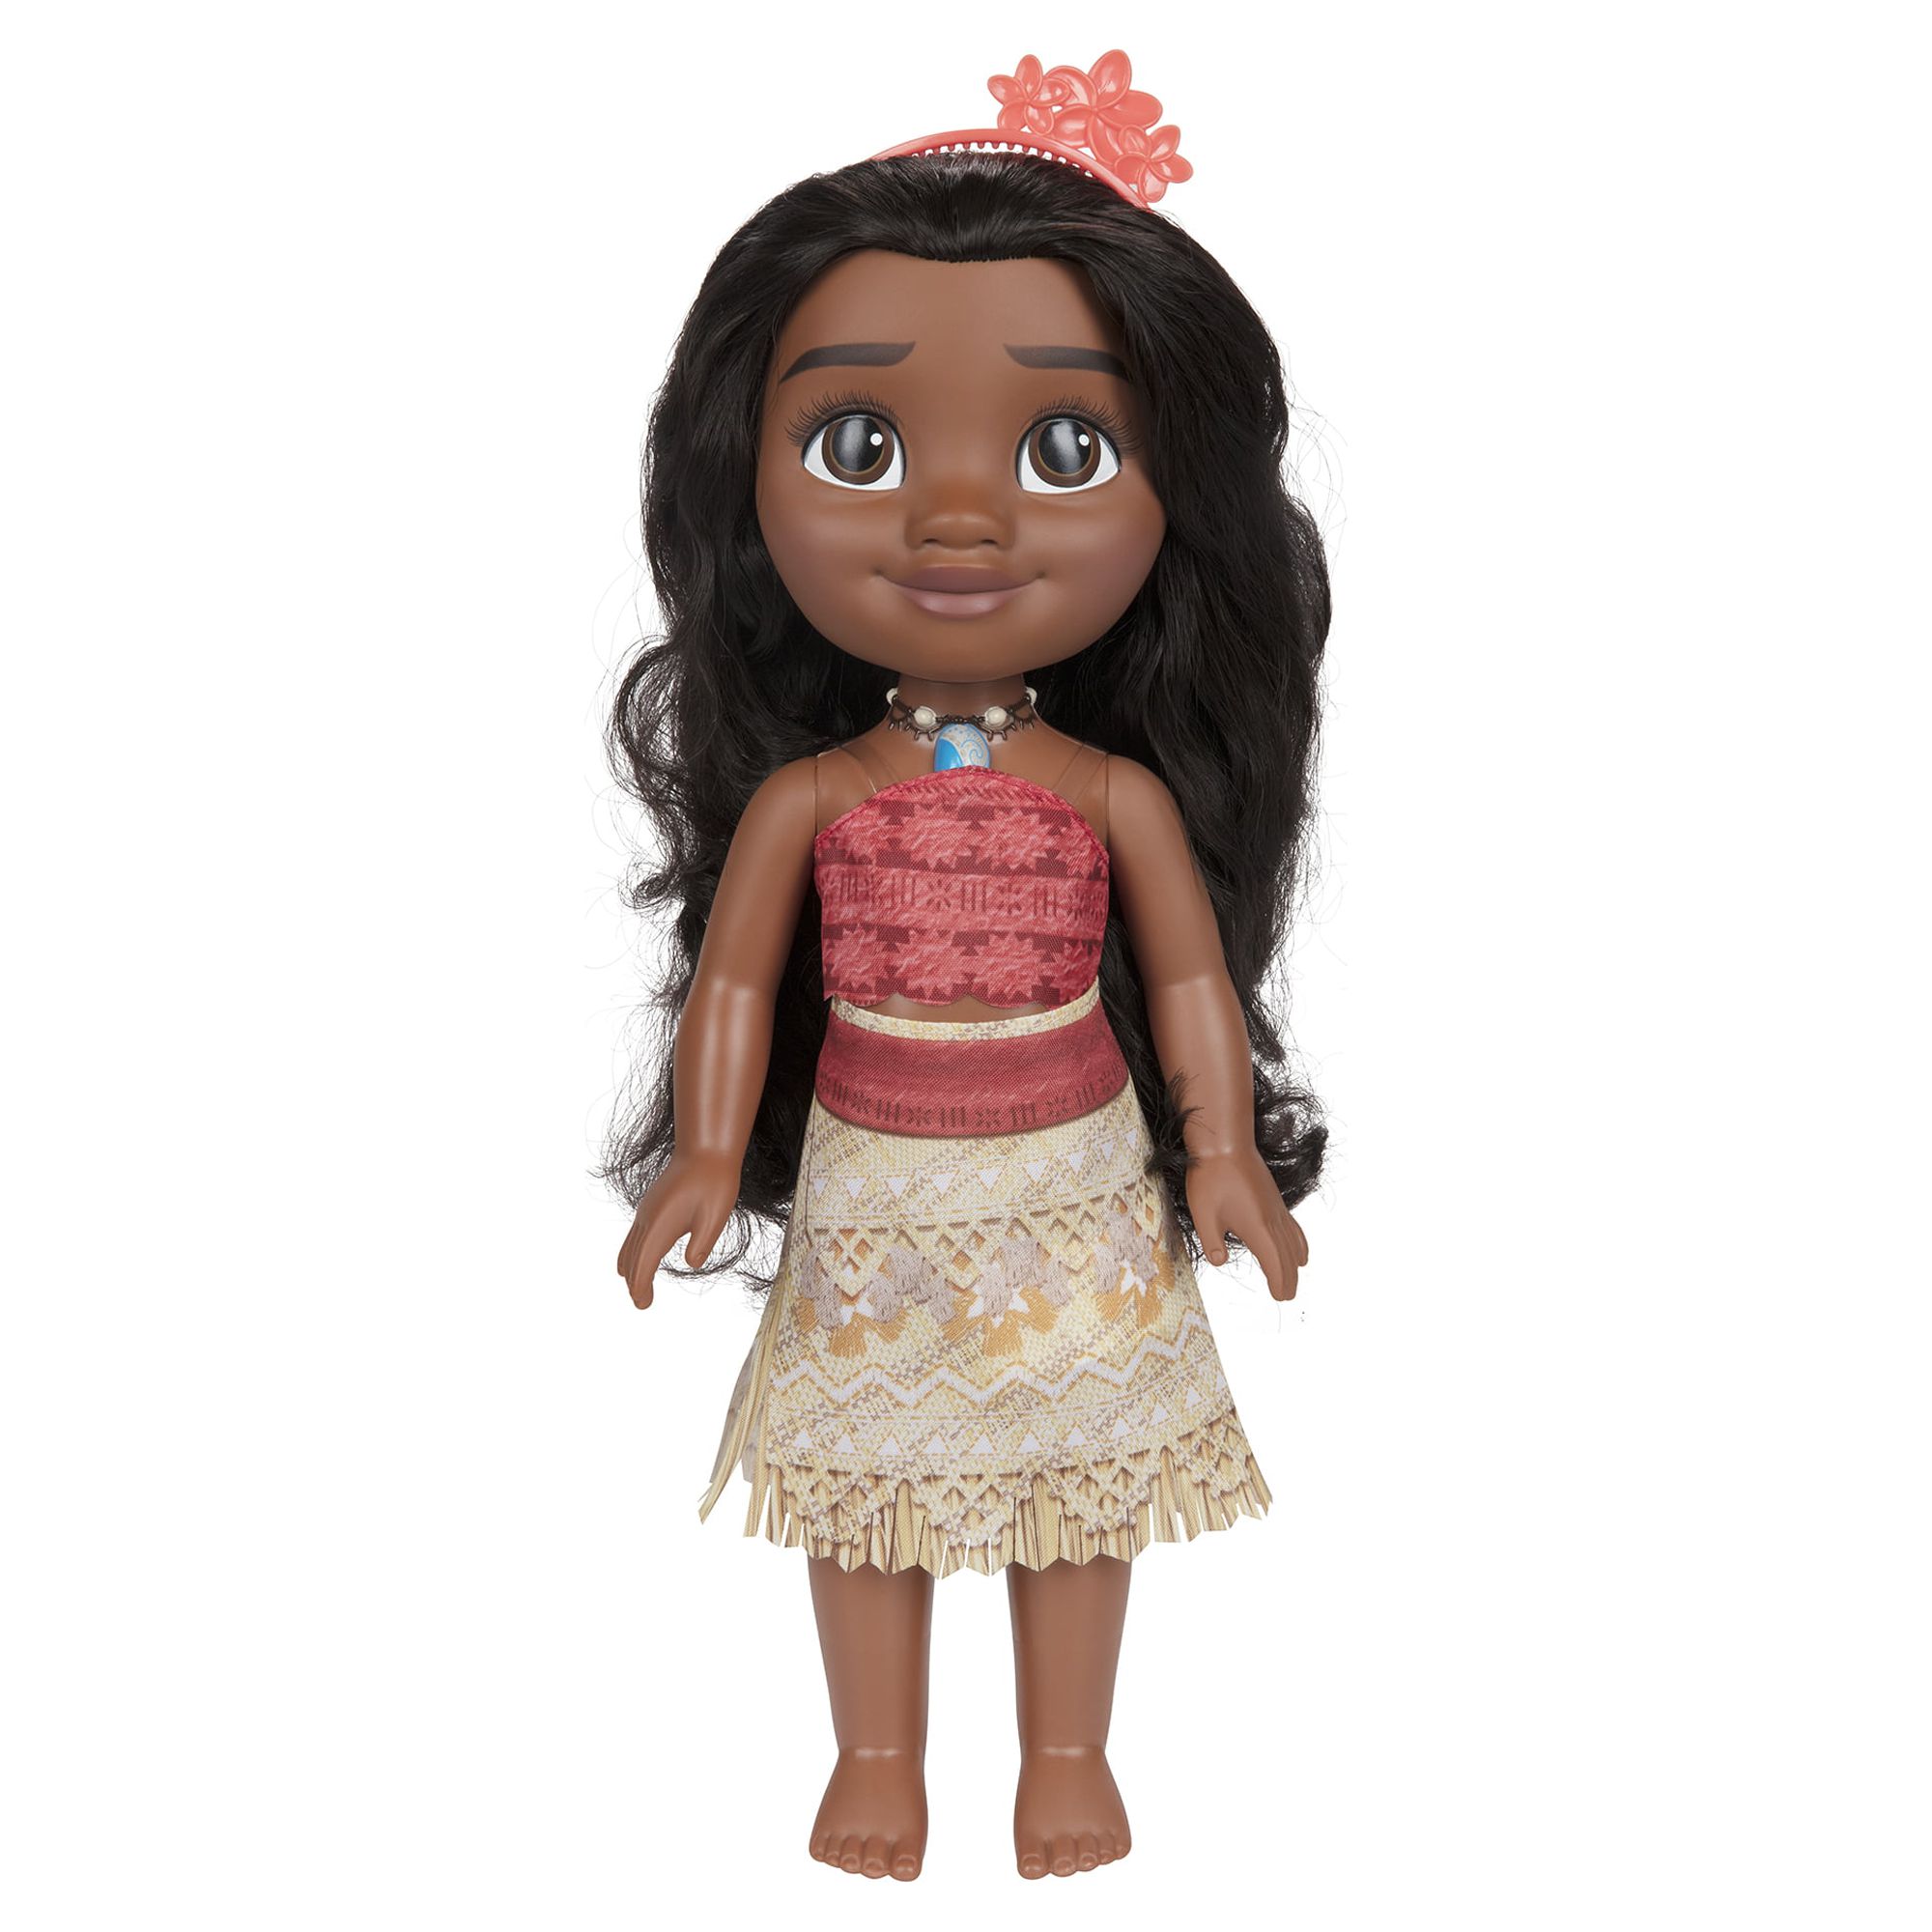 Disney Princess My Friend Moana Doll with Child Size Dress Gift Set - image 2 of 10